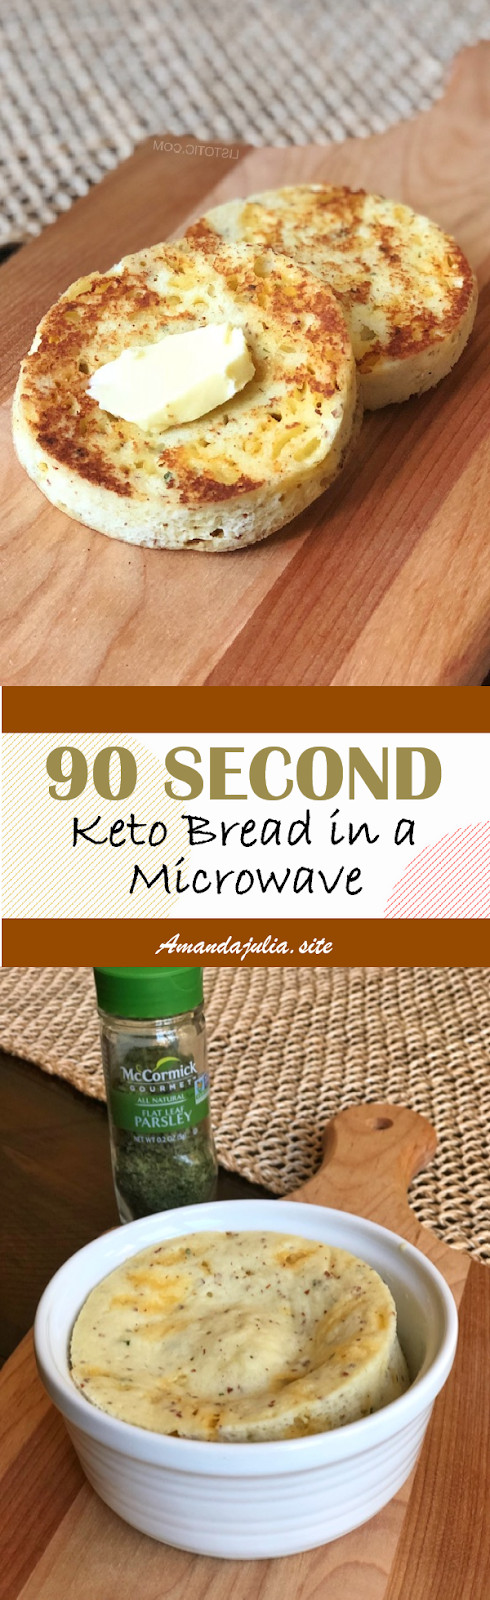 Keto Garlic Bread Microwave
 Easy Microwave Keto Bread Amandajuliate